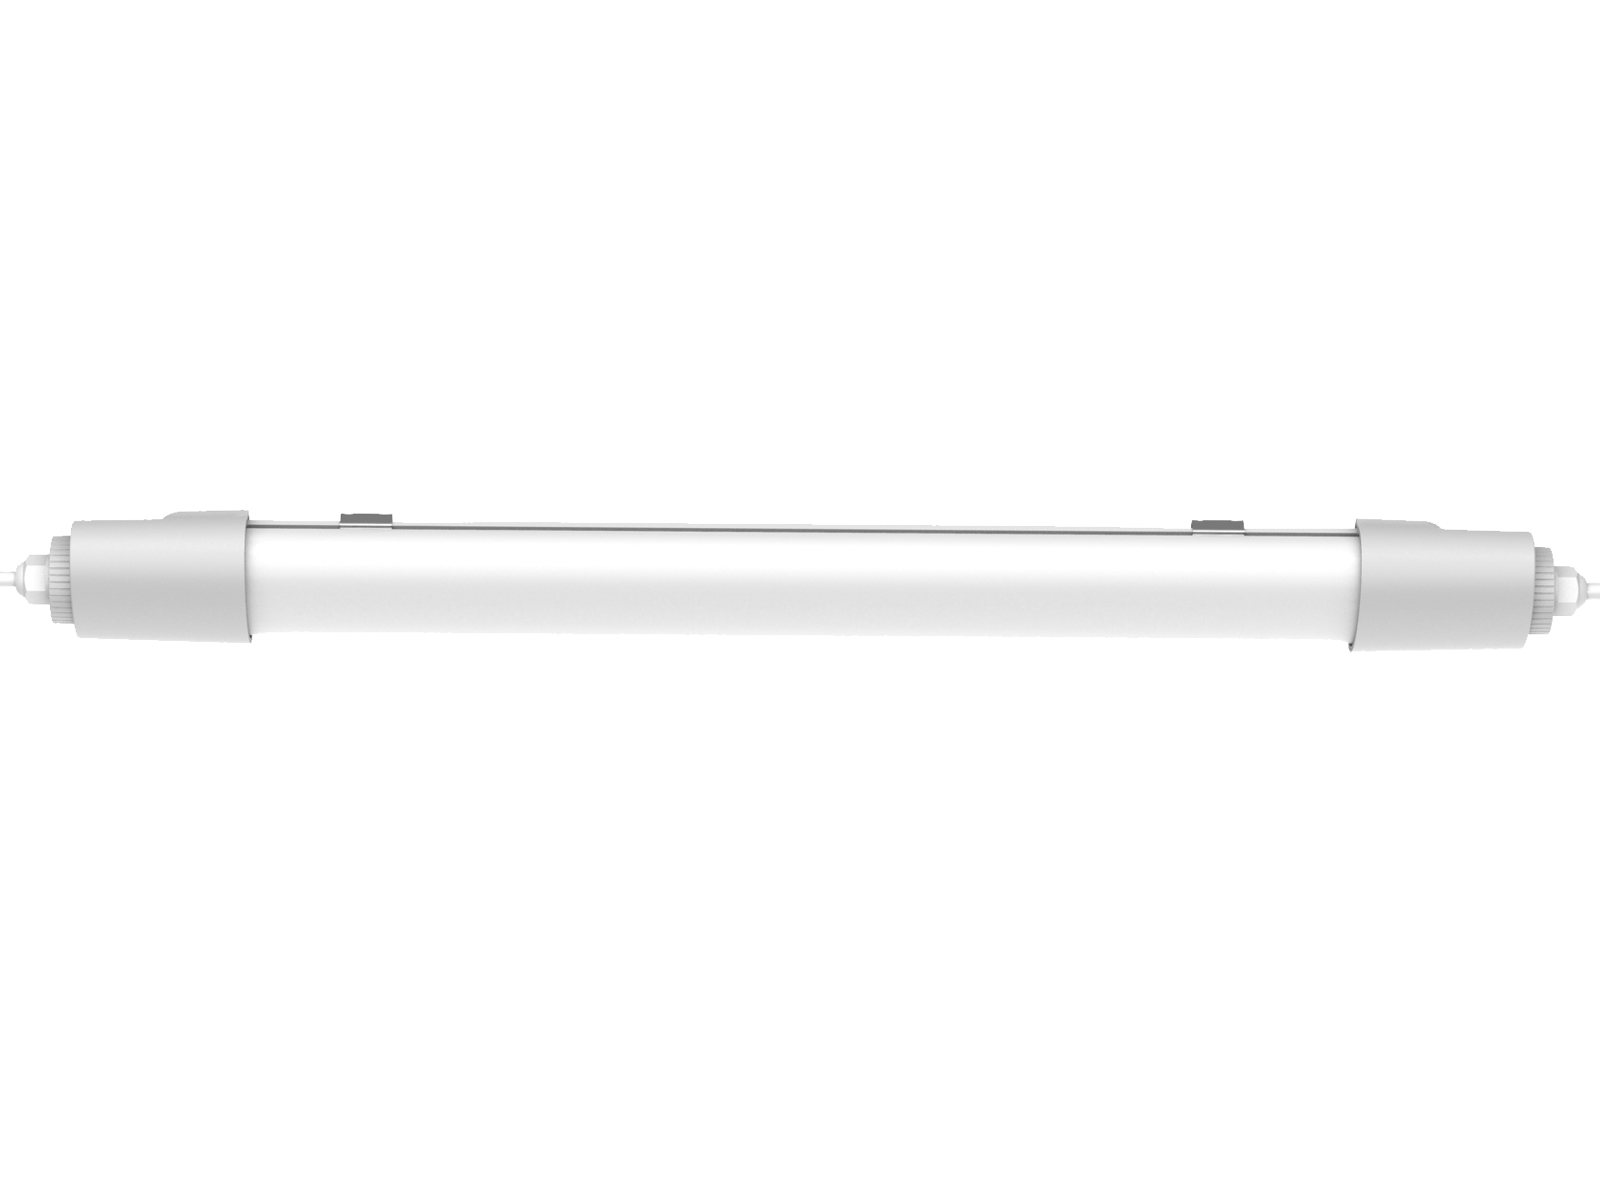 Instant Start-Up Cool White 4000K 4ft 120cm Anti Corrosive LED Batten Energy Saving Flicker Free IP65 Weatherproof Linear Batten 2700 Lumens Waterproof Outdoor Ceiling Light